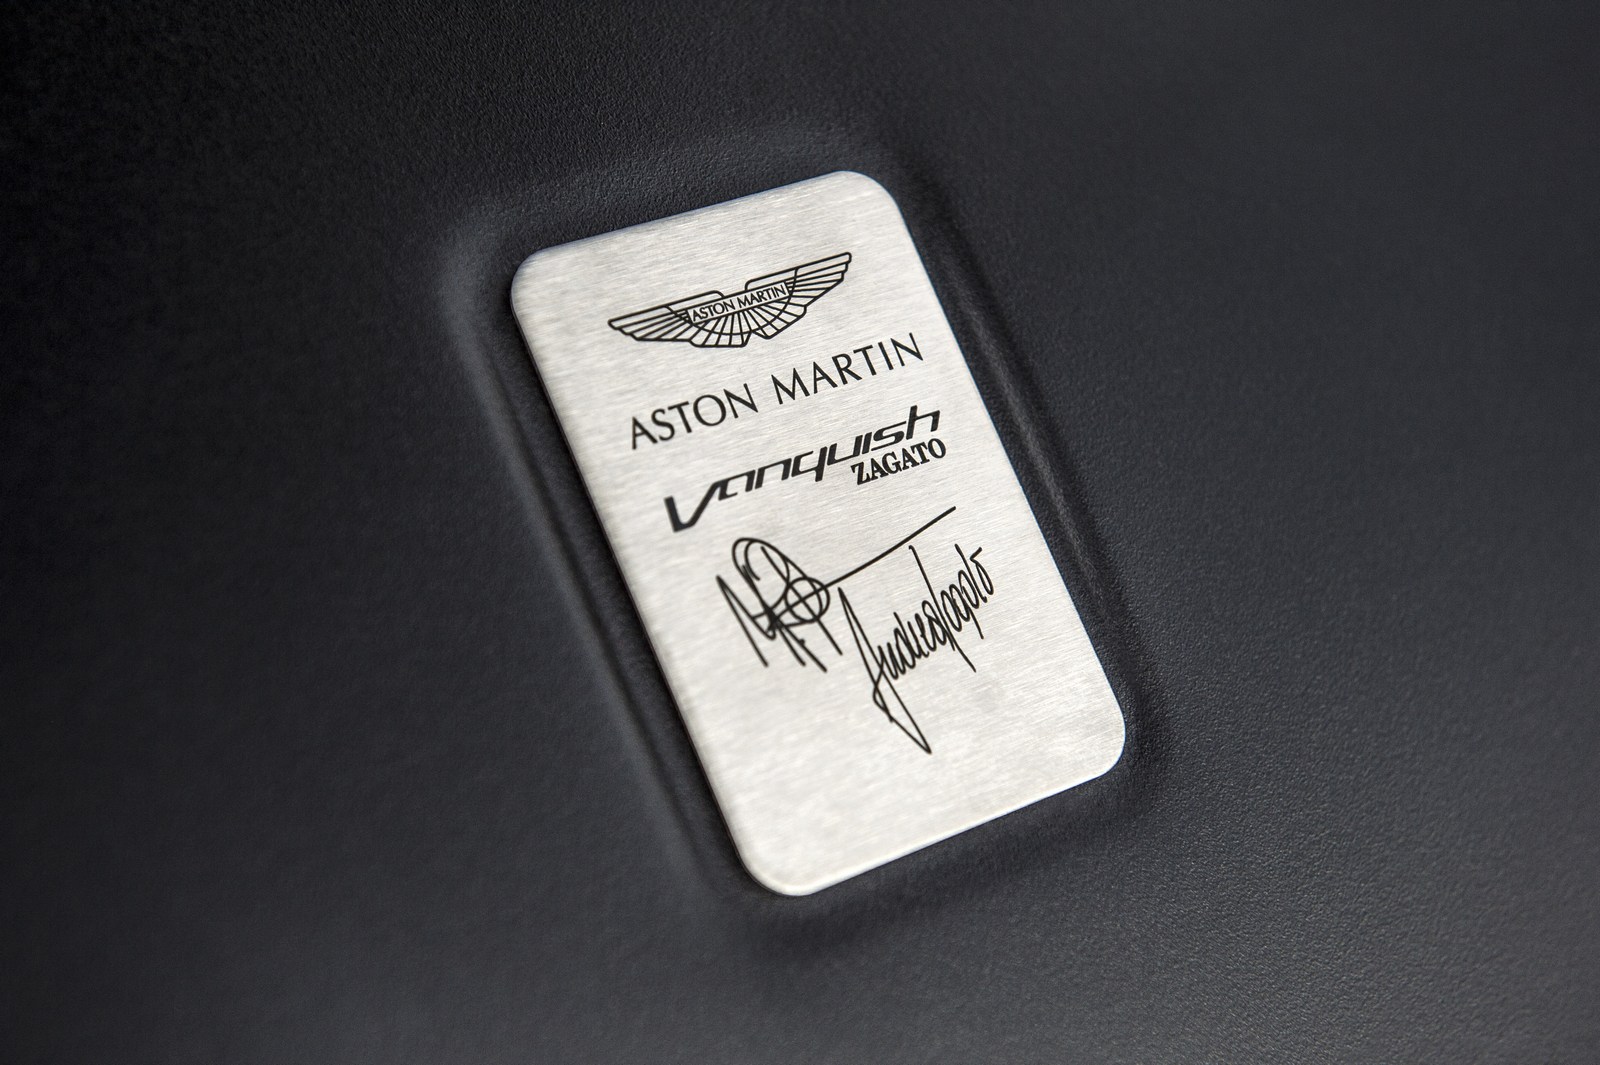 Aston Martin Speedster